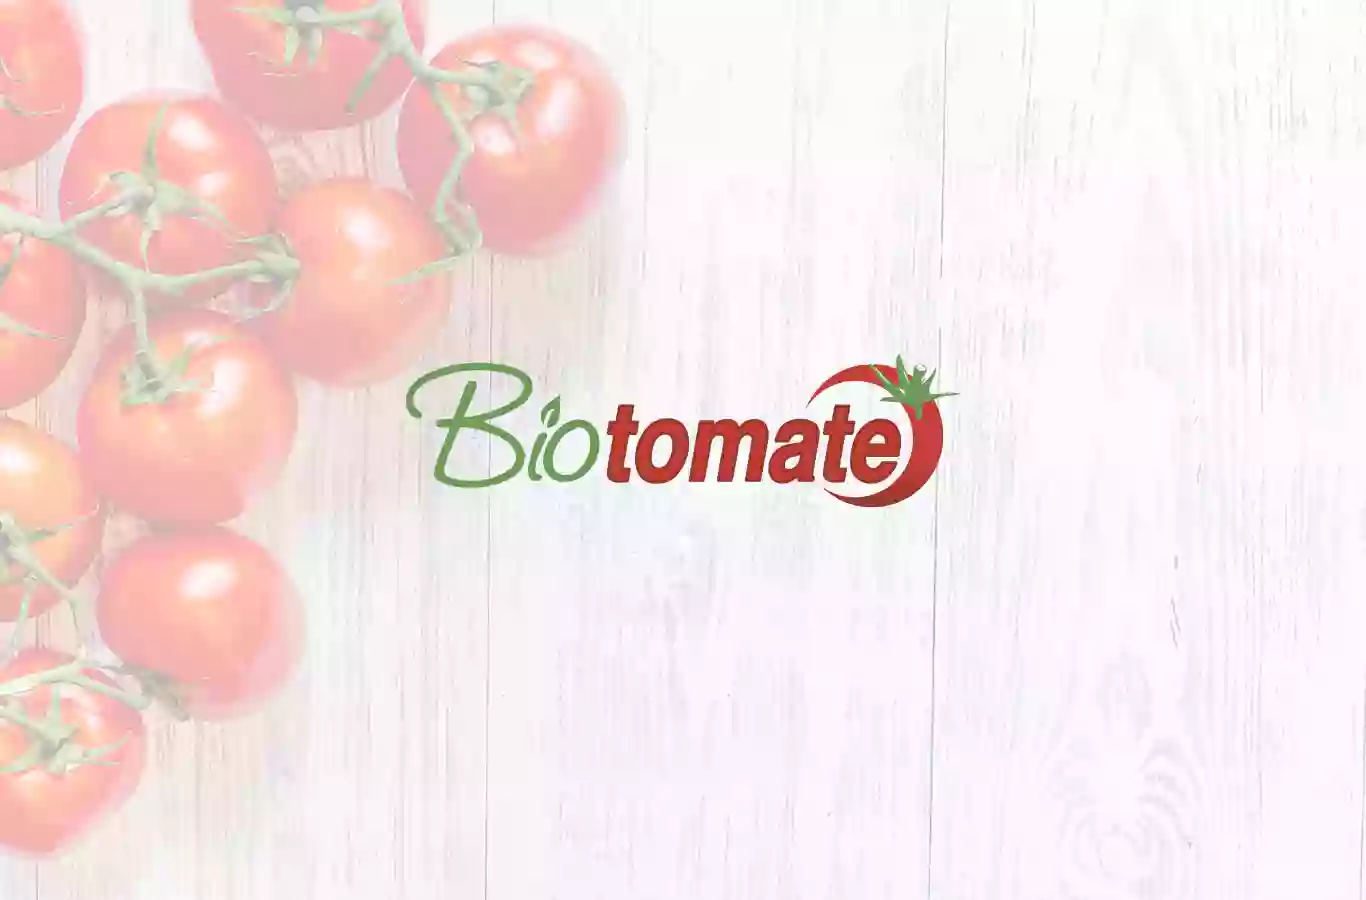 Biotomate